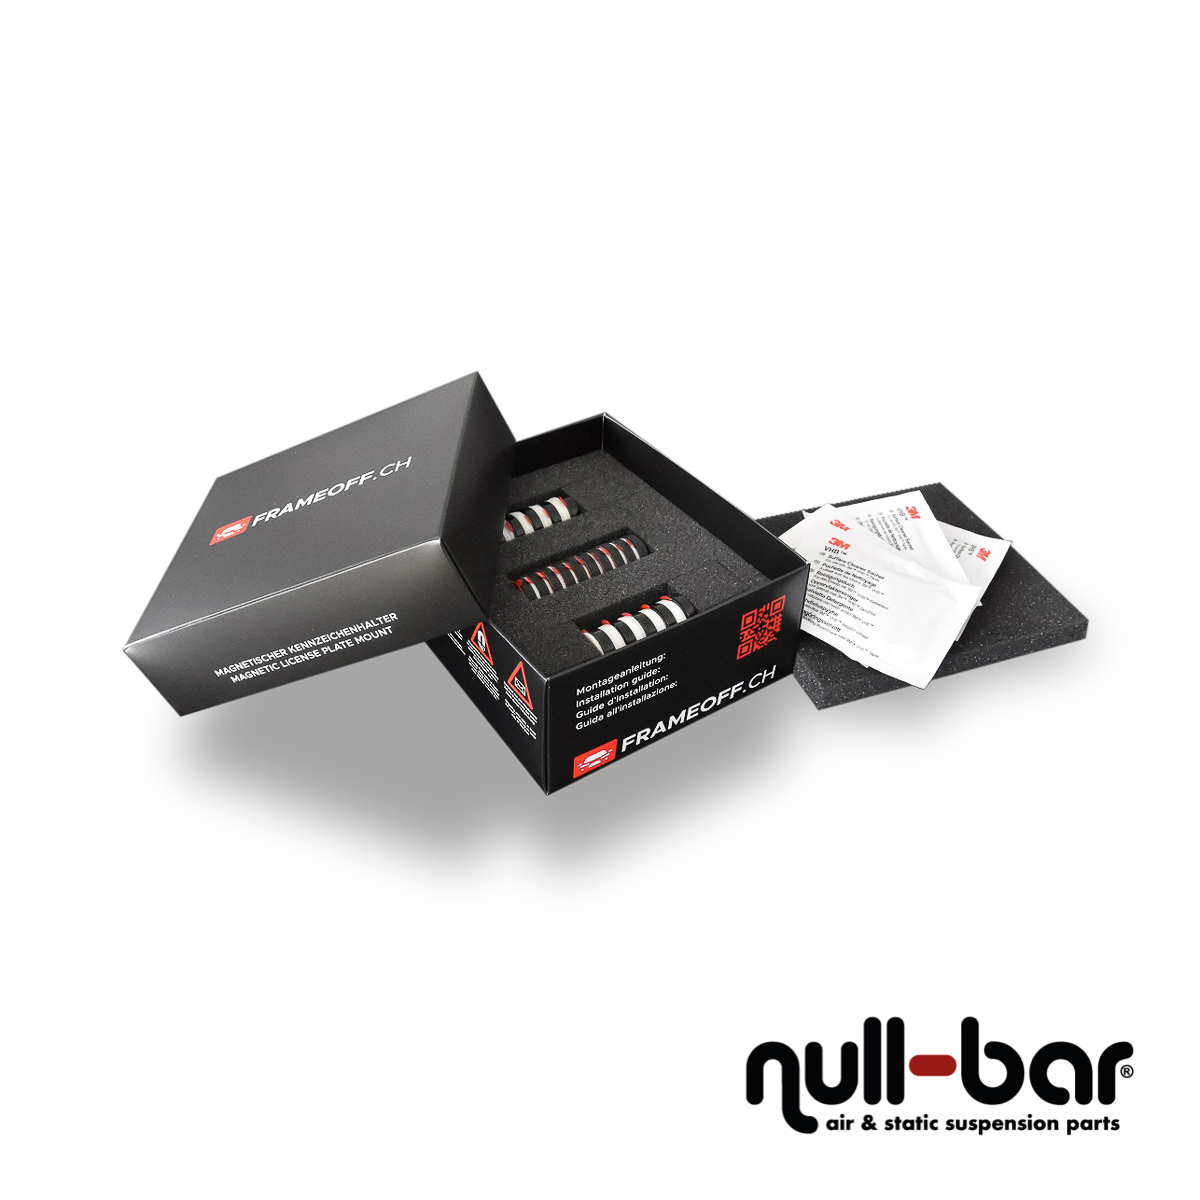 null-bar  air & static suspension parts